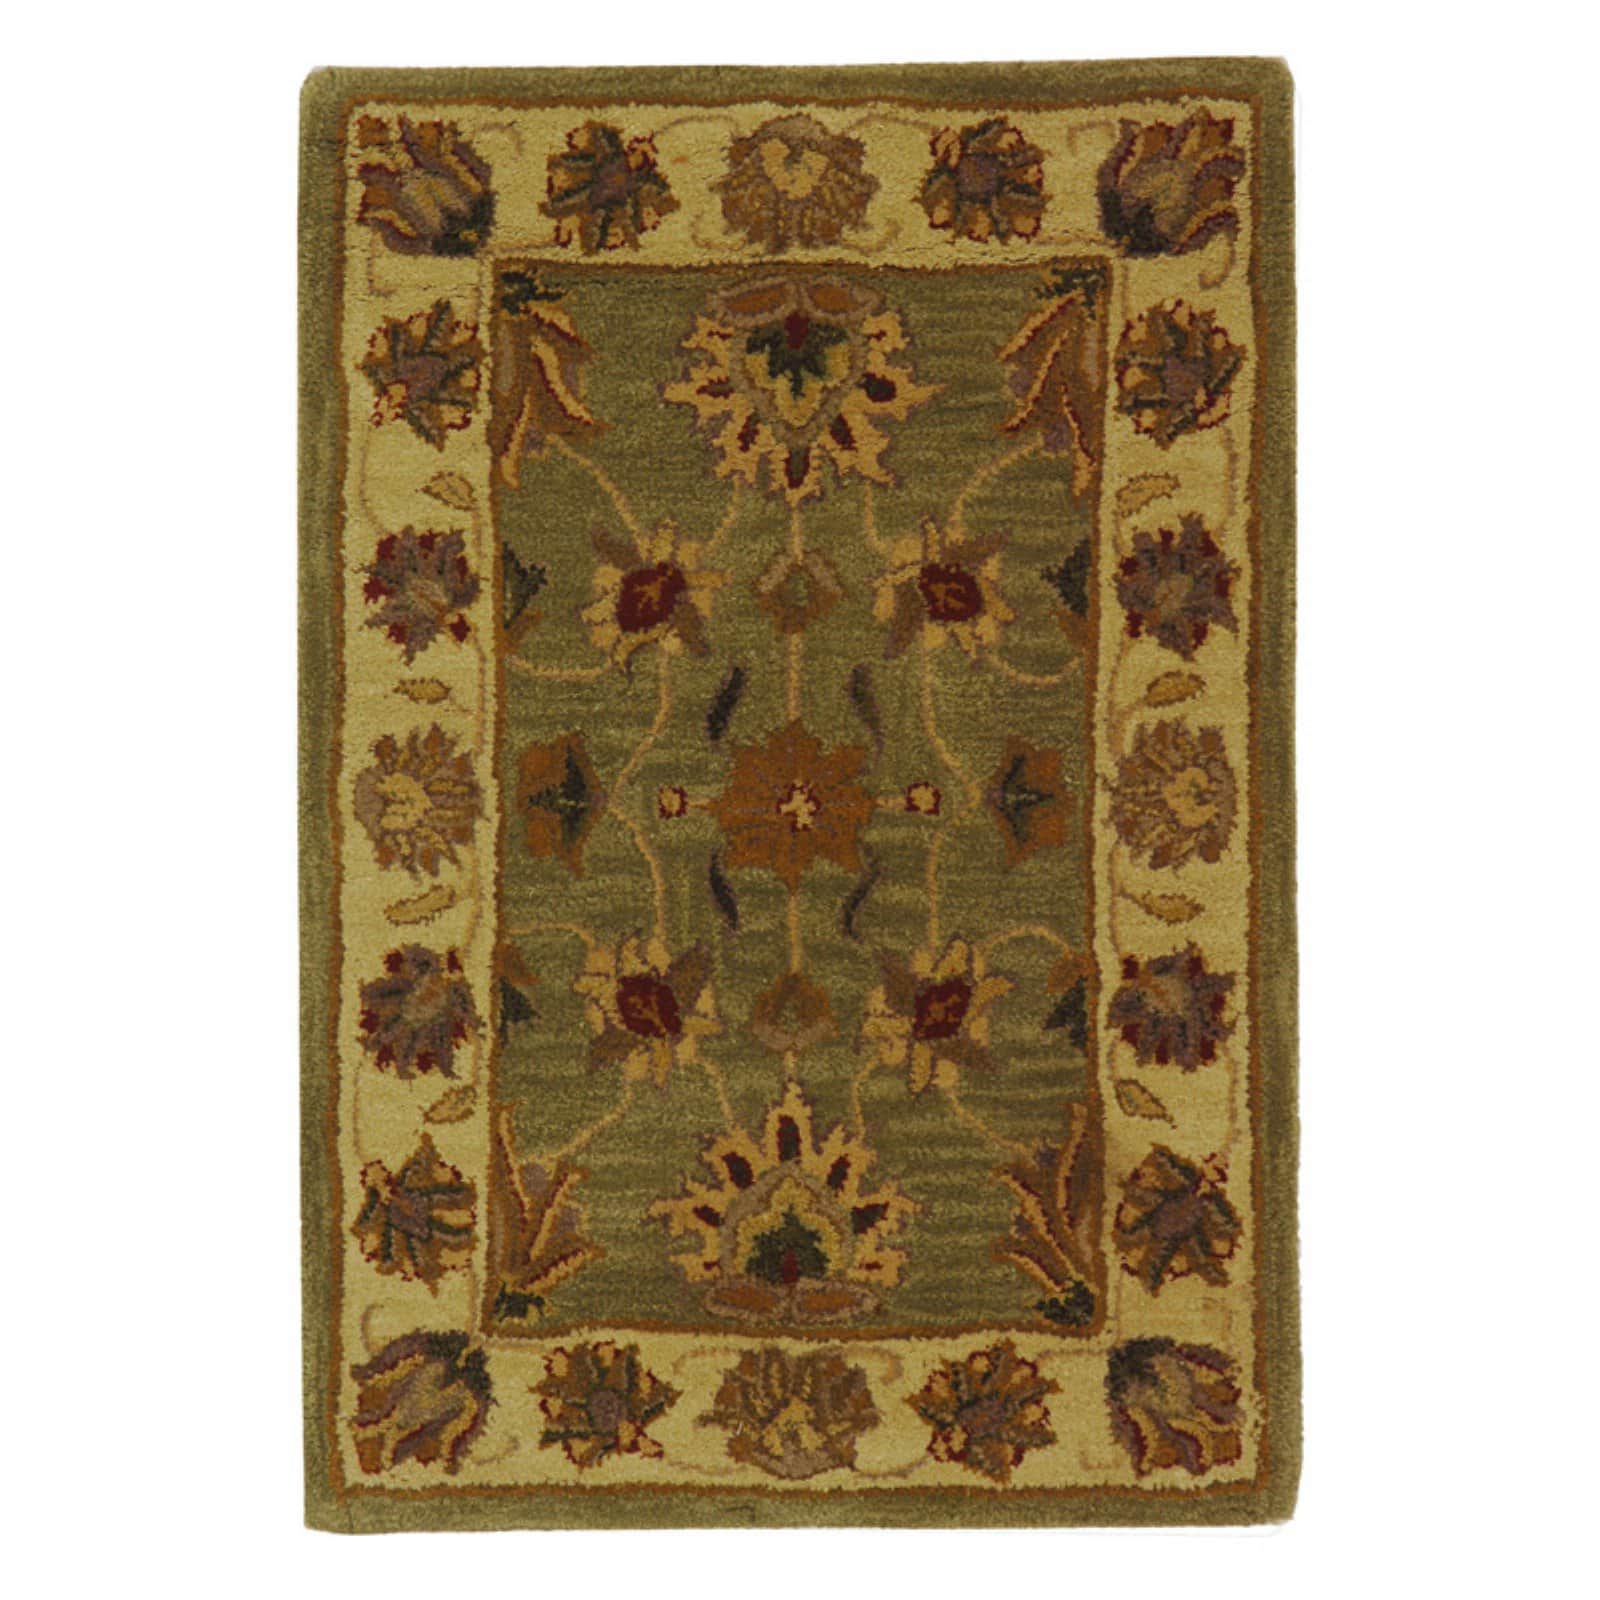 SAFAVIEH Heritage Regis Traditional Wool Area Rug, Green/Gold, 7'6" x 9'6" - image 2 of 10